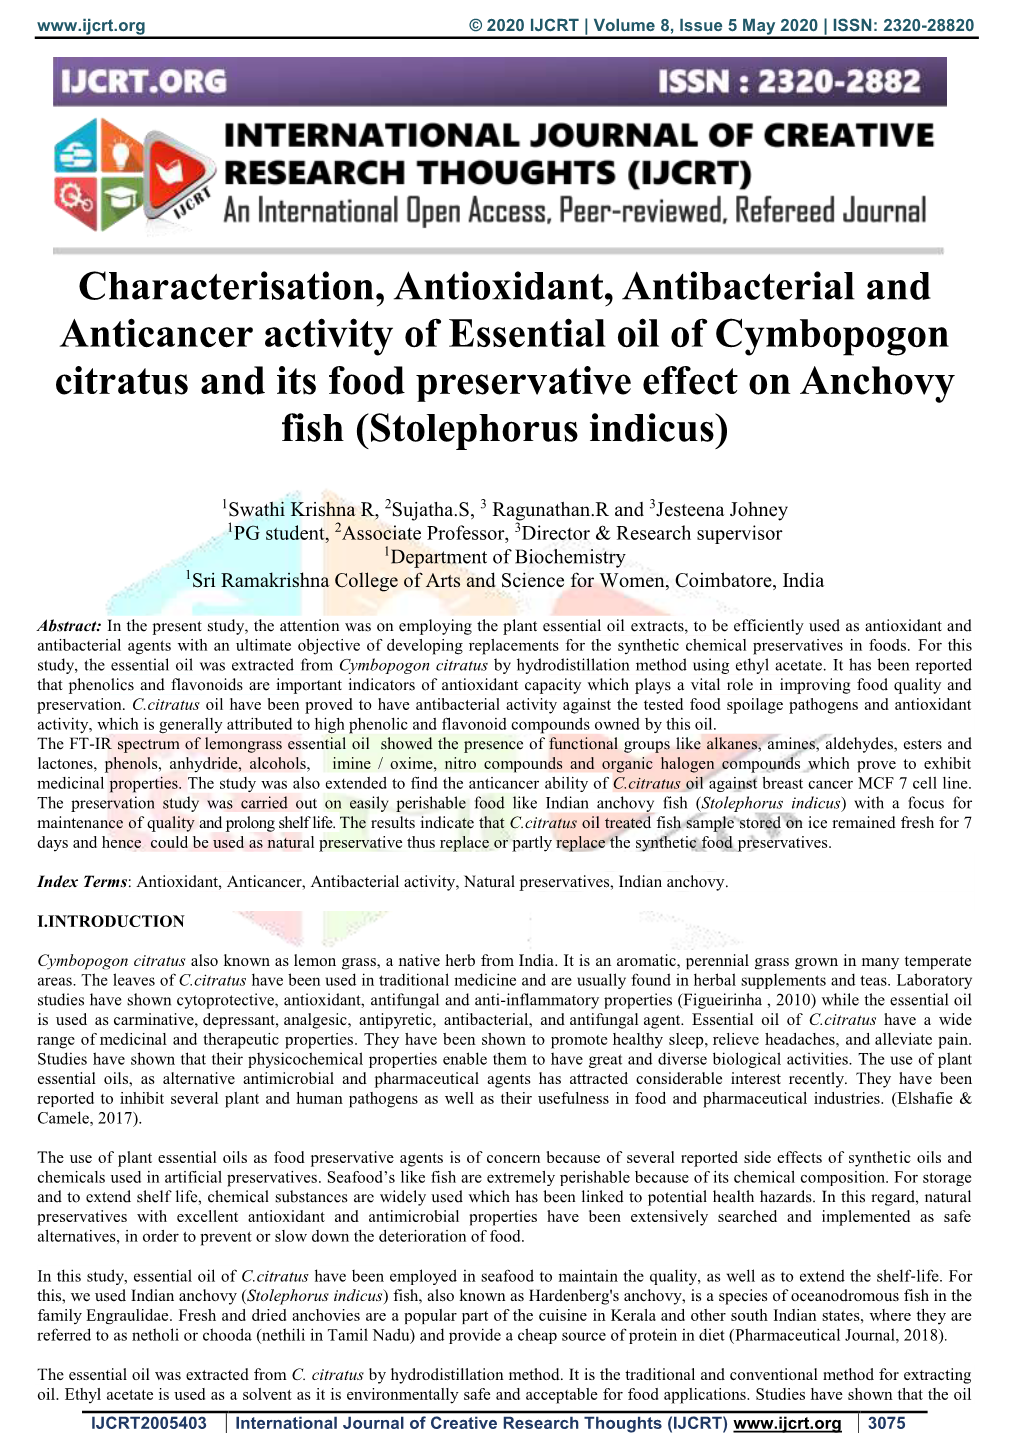 Characterisation, Antioxidant, Antibacterial and Anticancer Activity